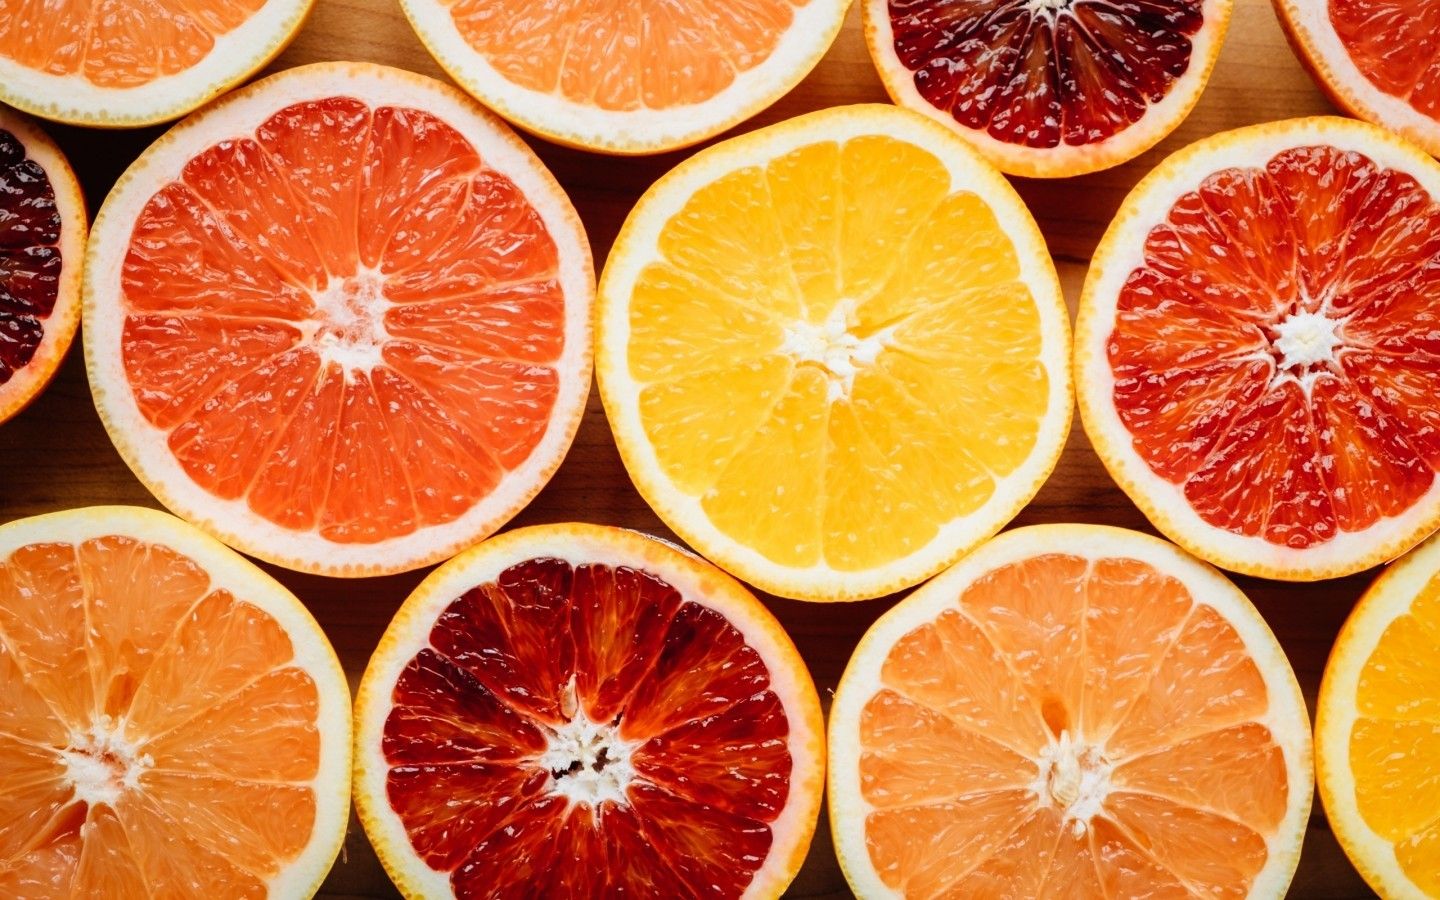 Download 1440x900 Orange, Grapefruit, Citrus, Fruits Wallpaper for MacBook Pro 15 inch, MacBook Air 13 inch